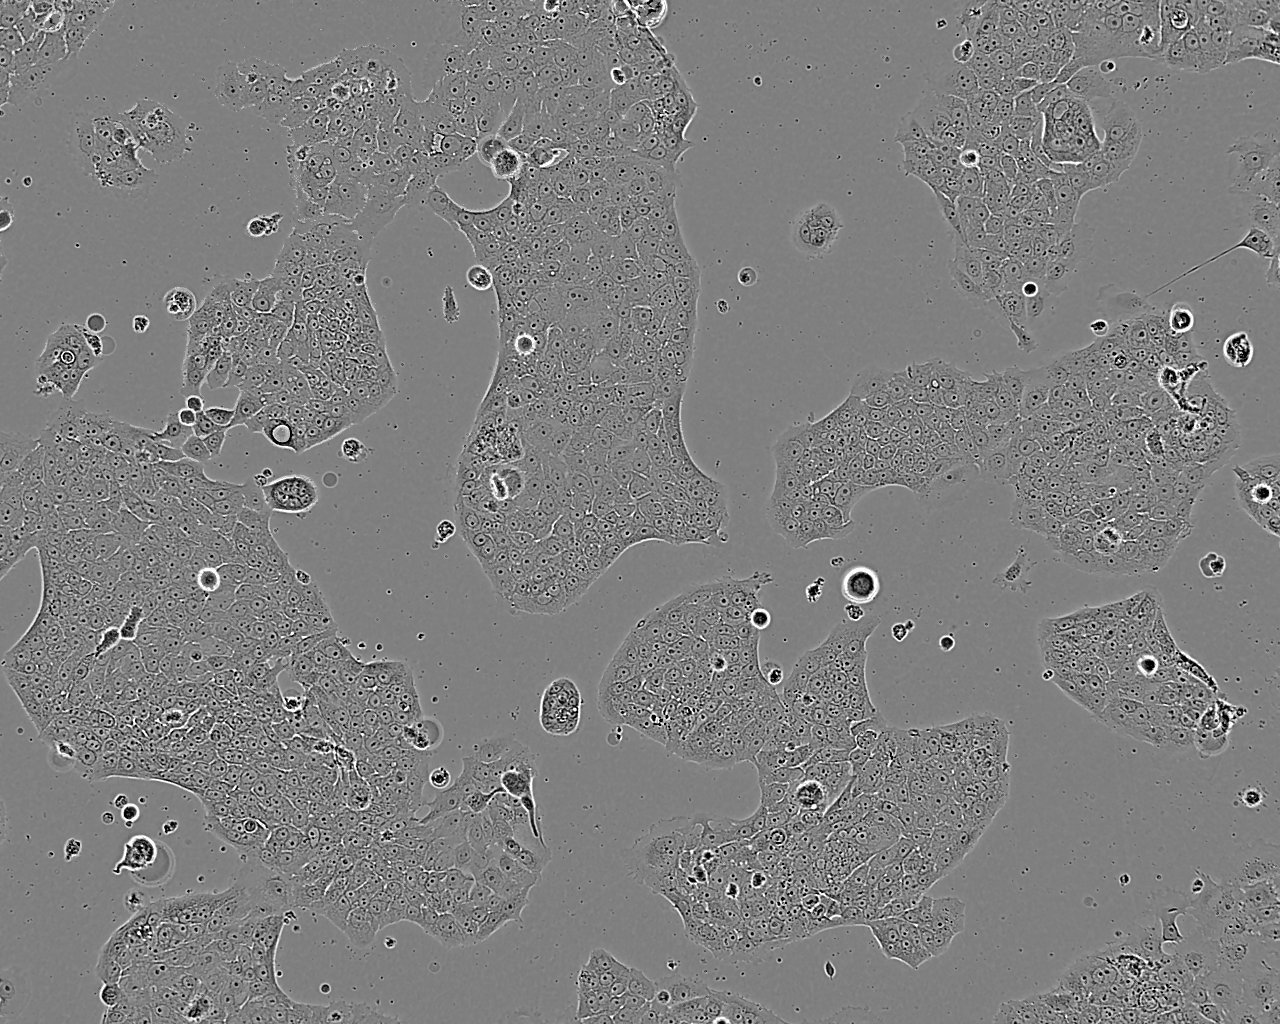 NCI-H2444 epithelioid cells人非小细胞肺癌细胞系